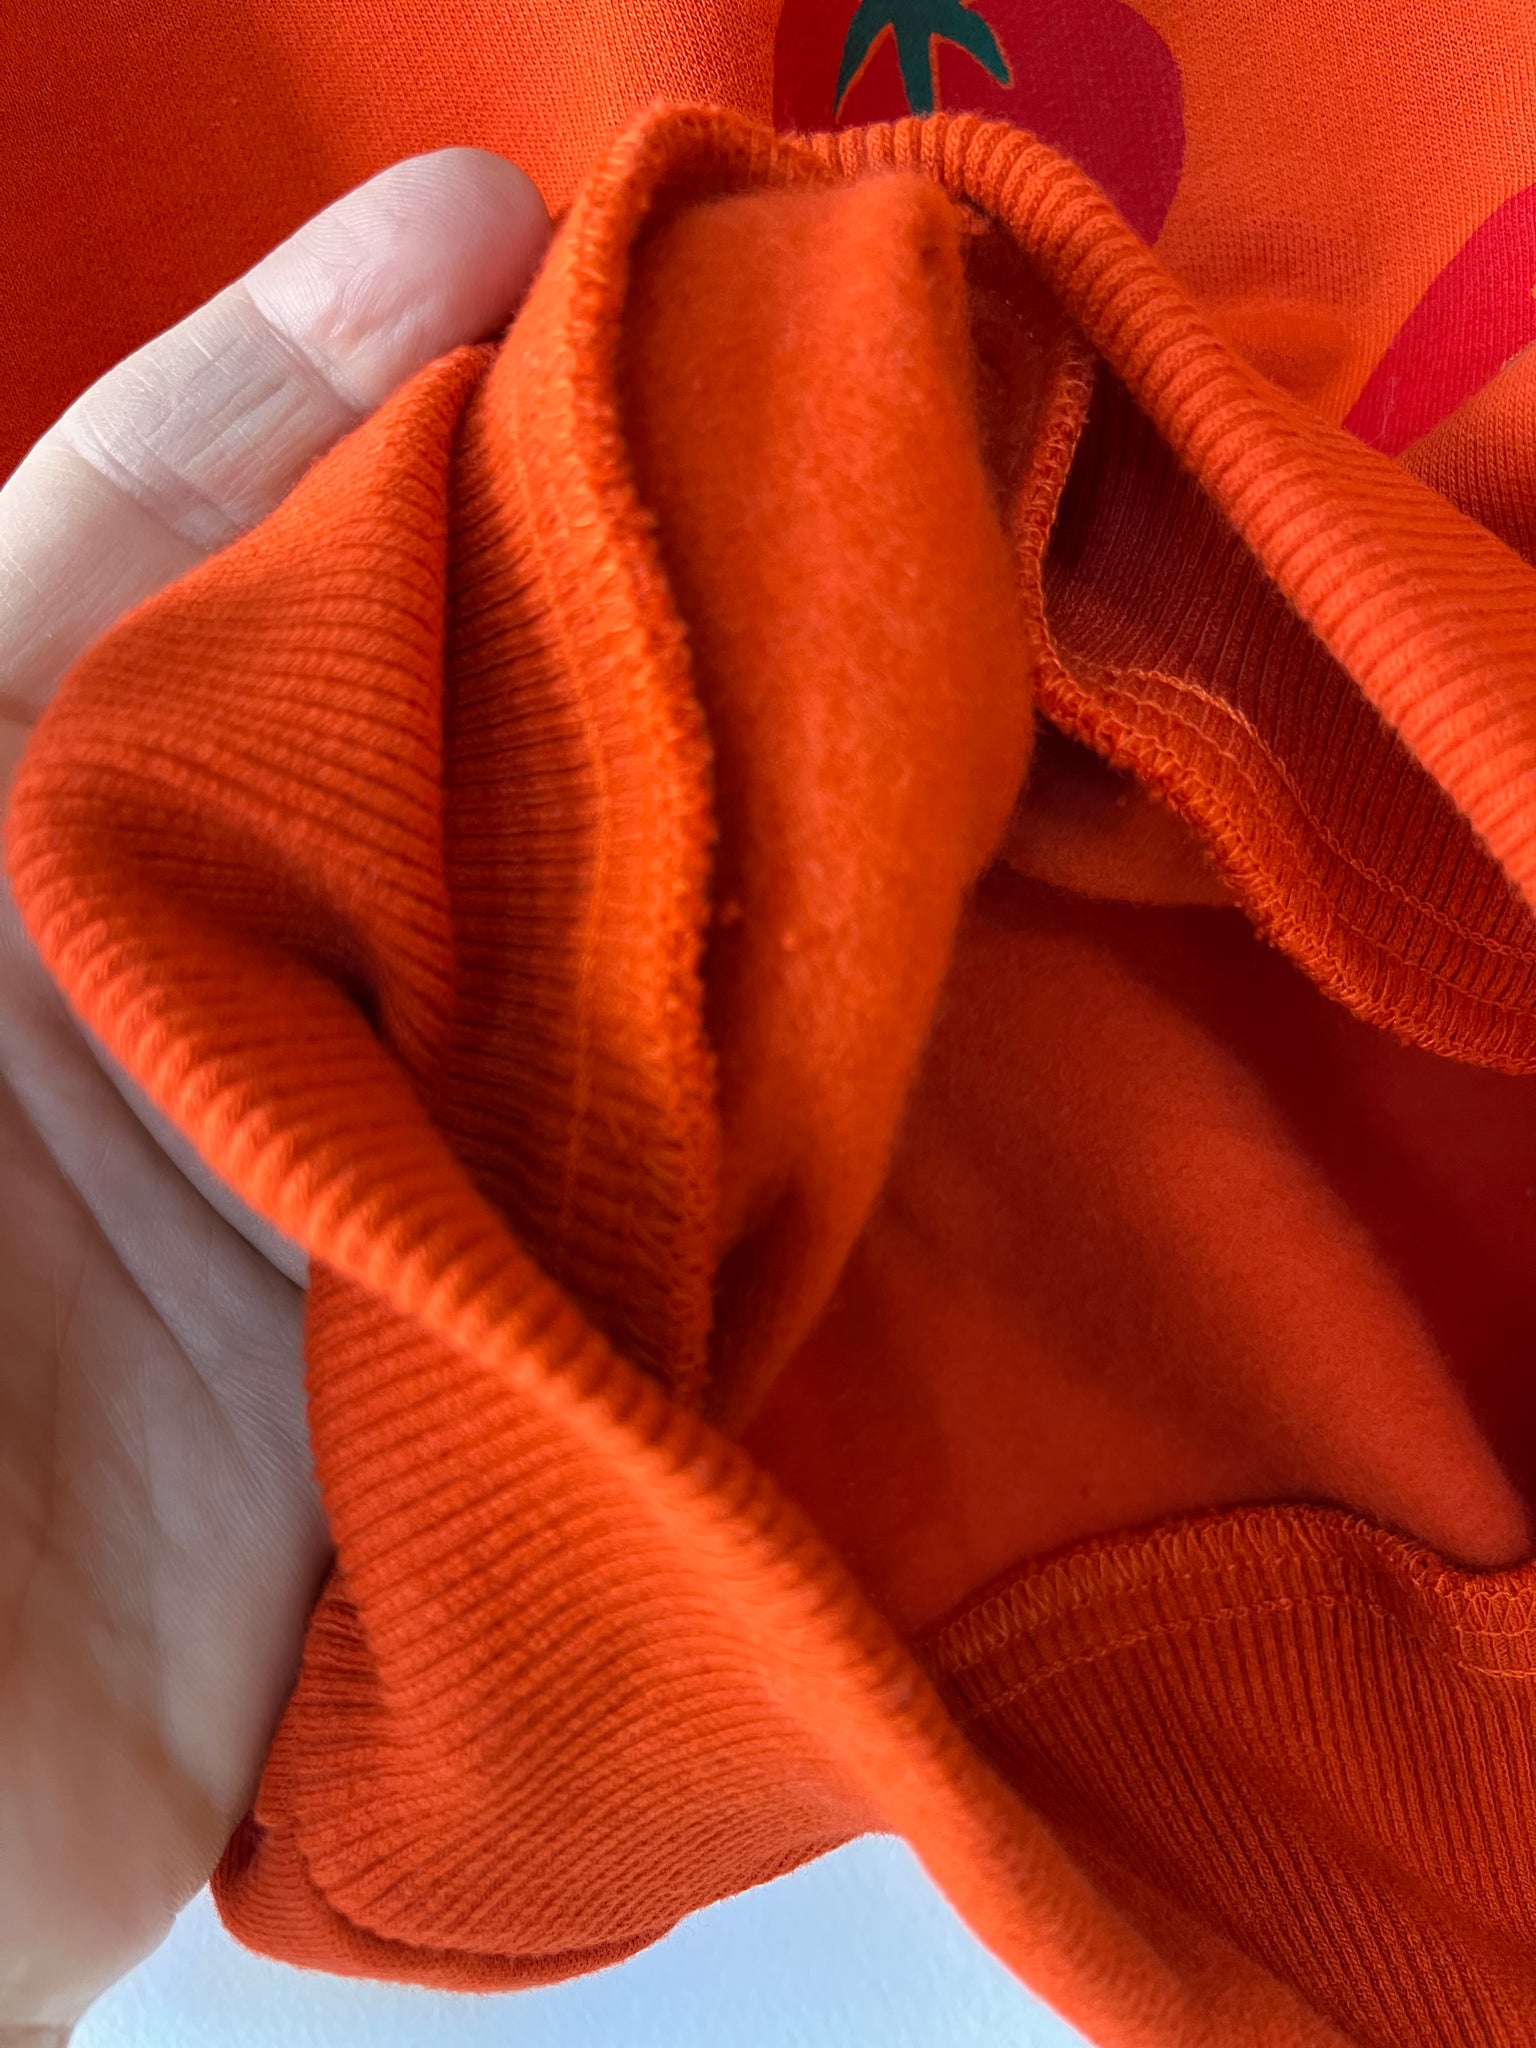 Tomato sweatshirt -orange/red organic cotton